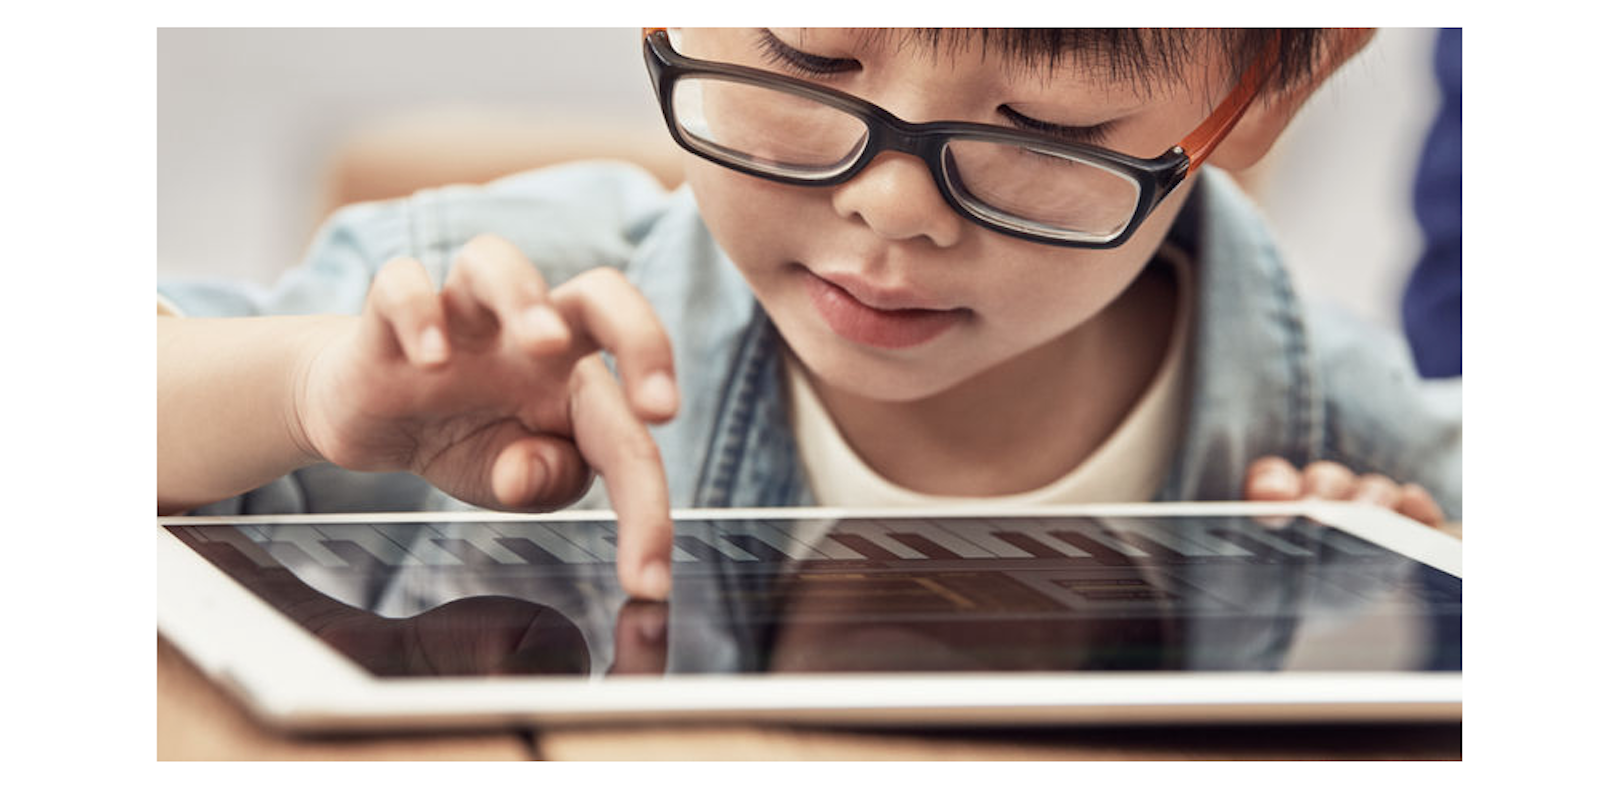 Child wearing glasses using iPad